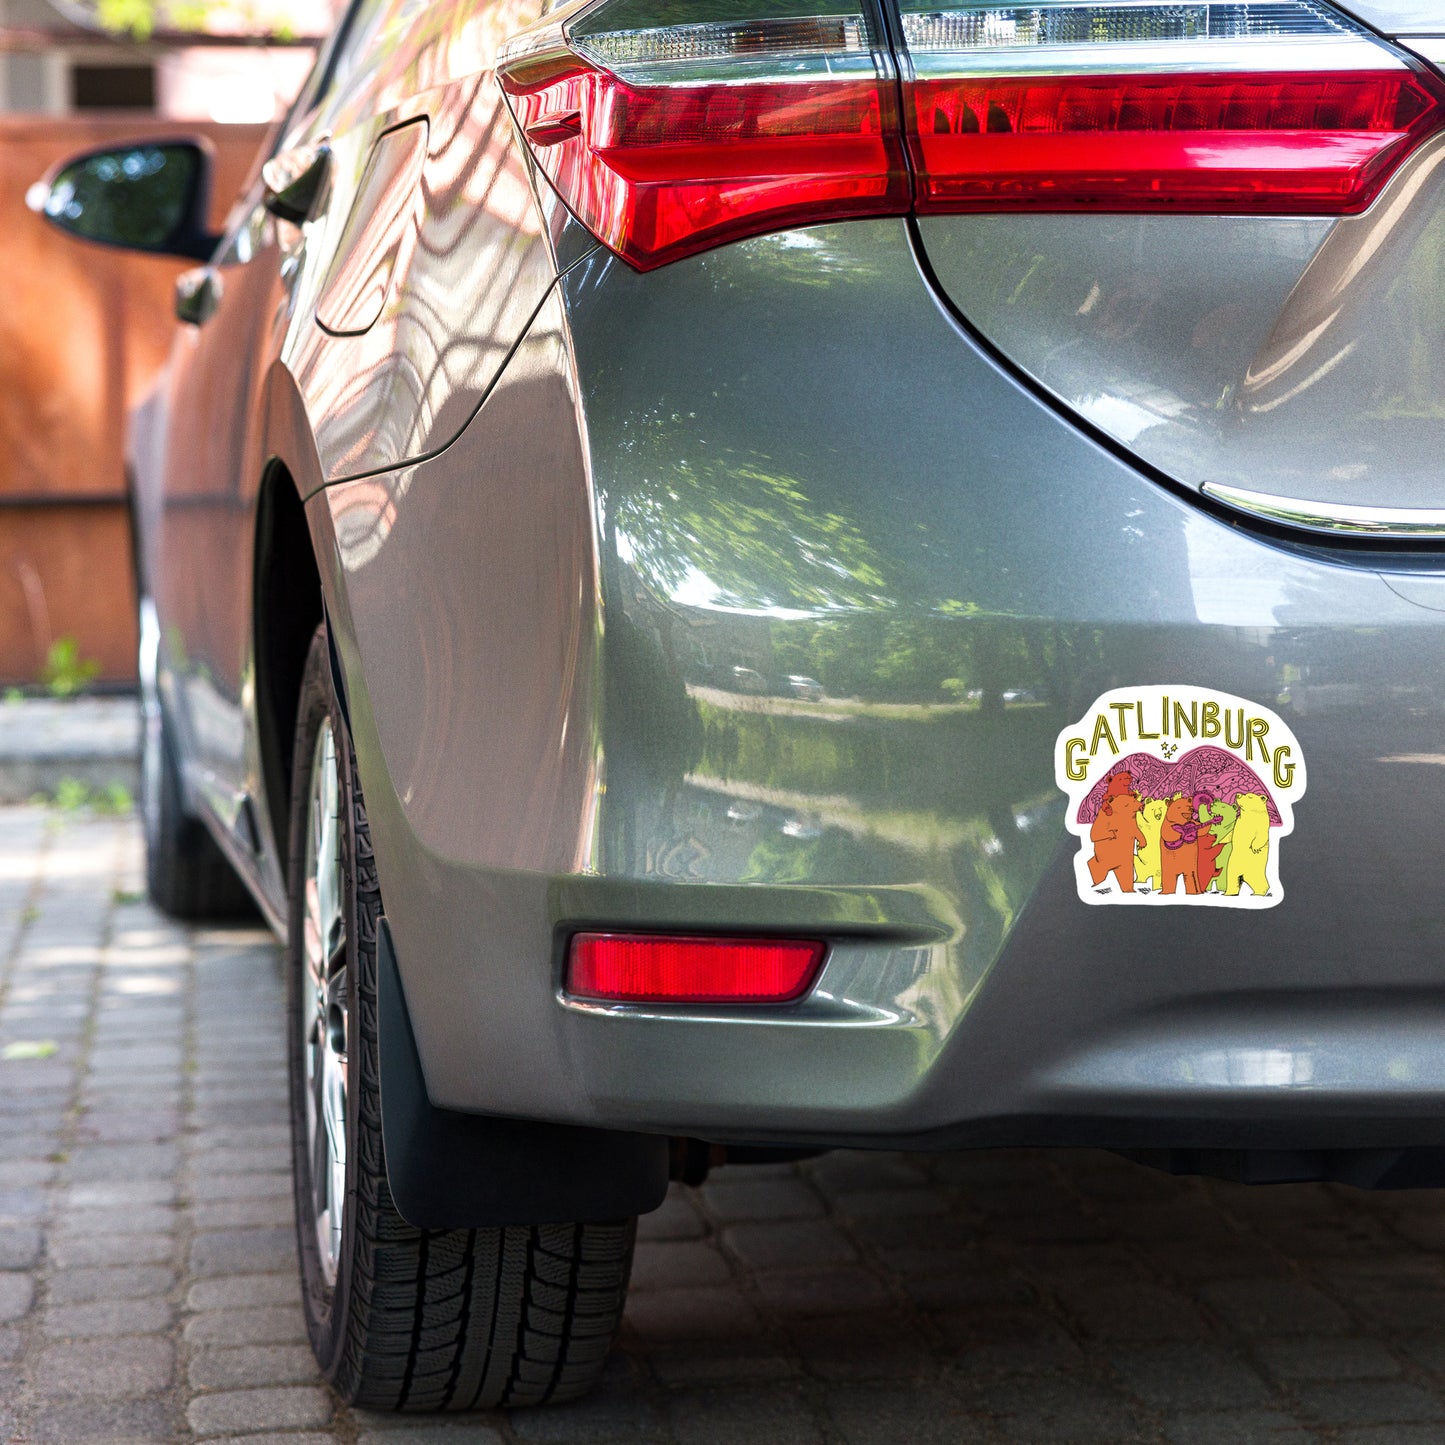 gatlinburg dancing bears die cut sticker displayed on rear bumper of car